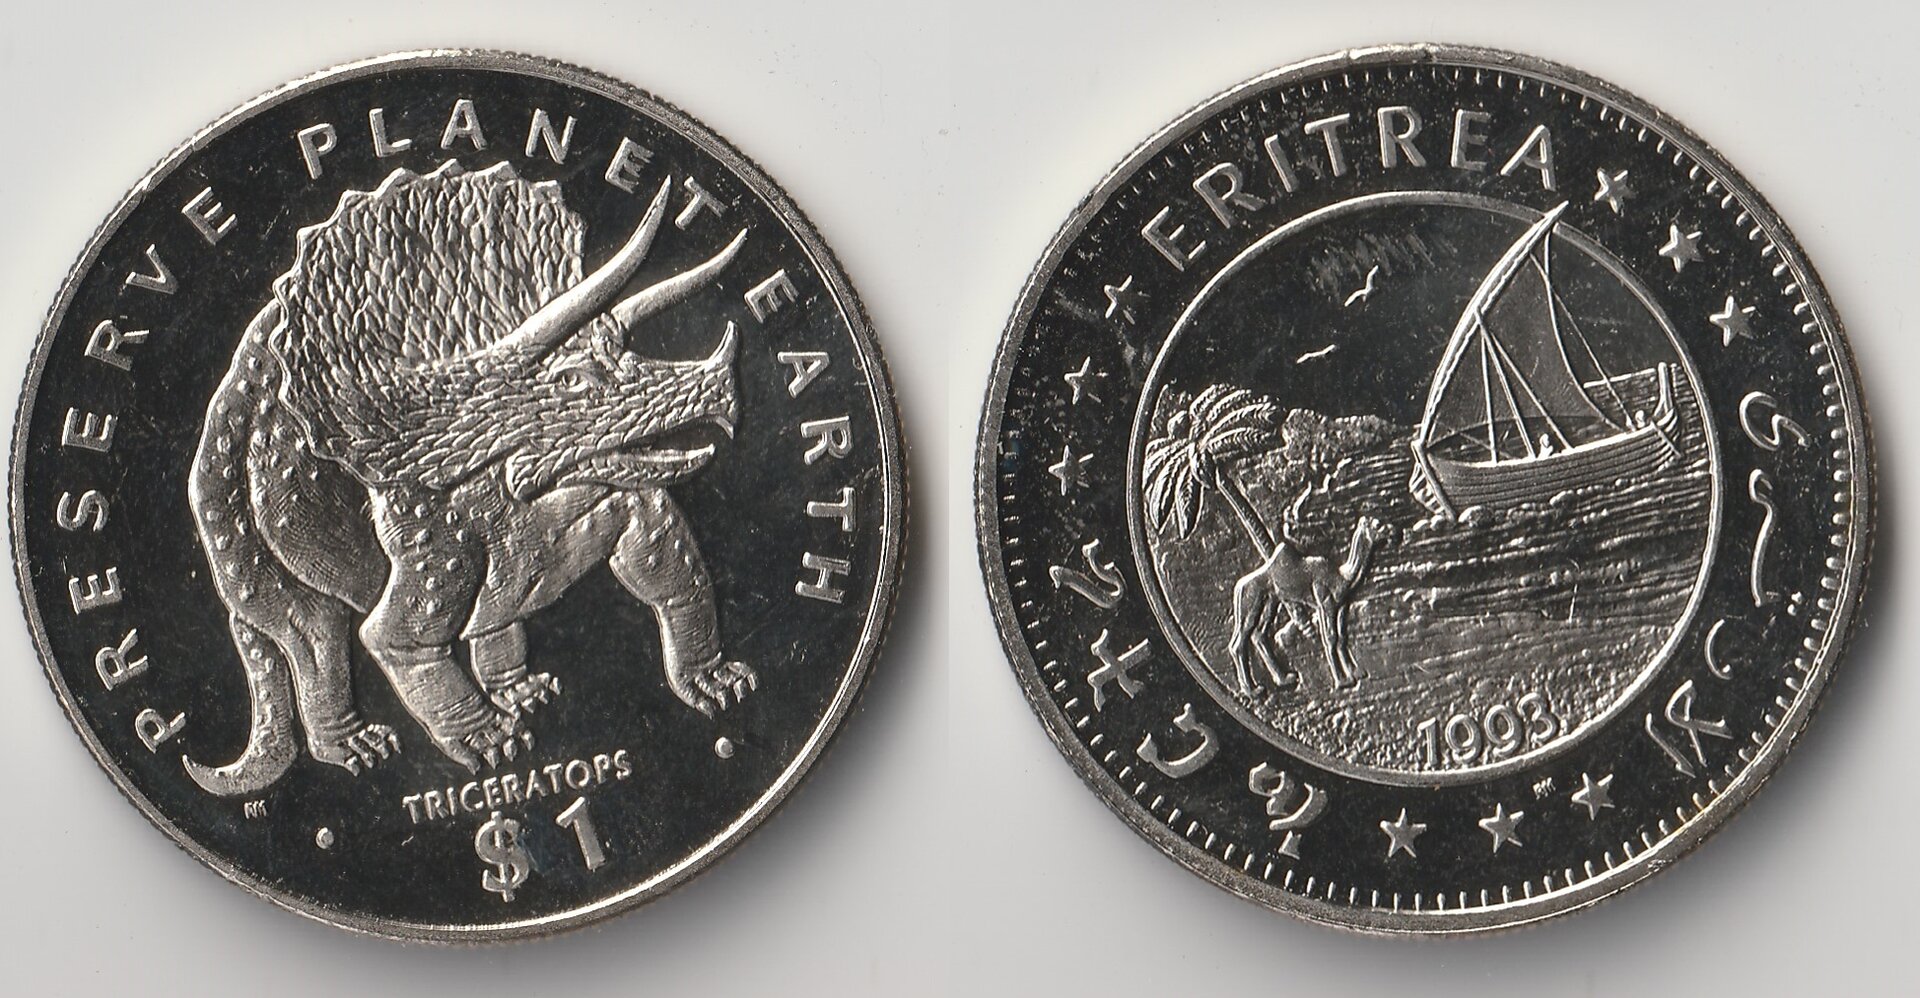 1993 eritrea 1 dollar triceratops.jpg